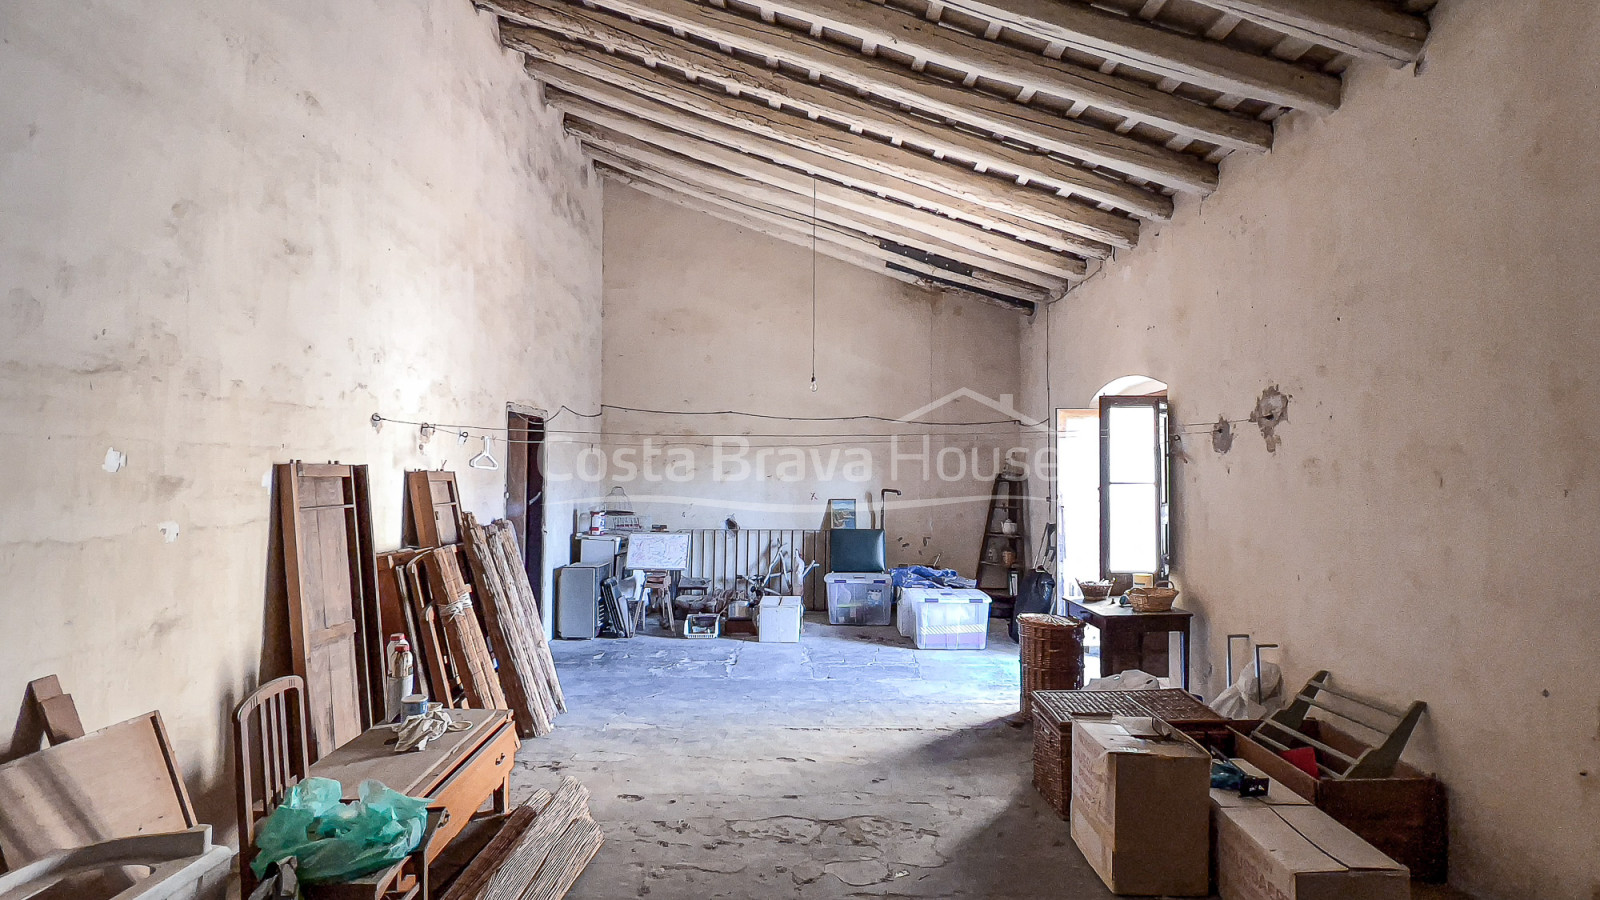 Historic renovated house for sale in Torroella de Montgrí